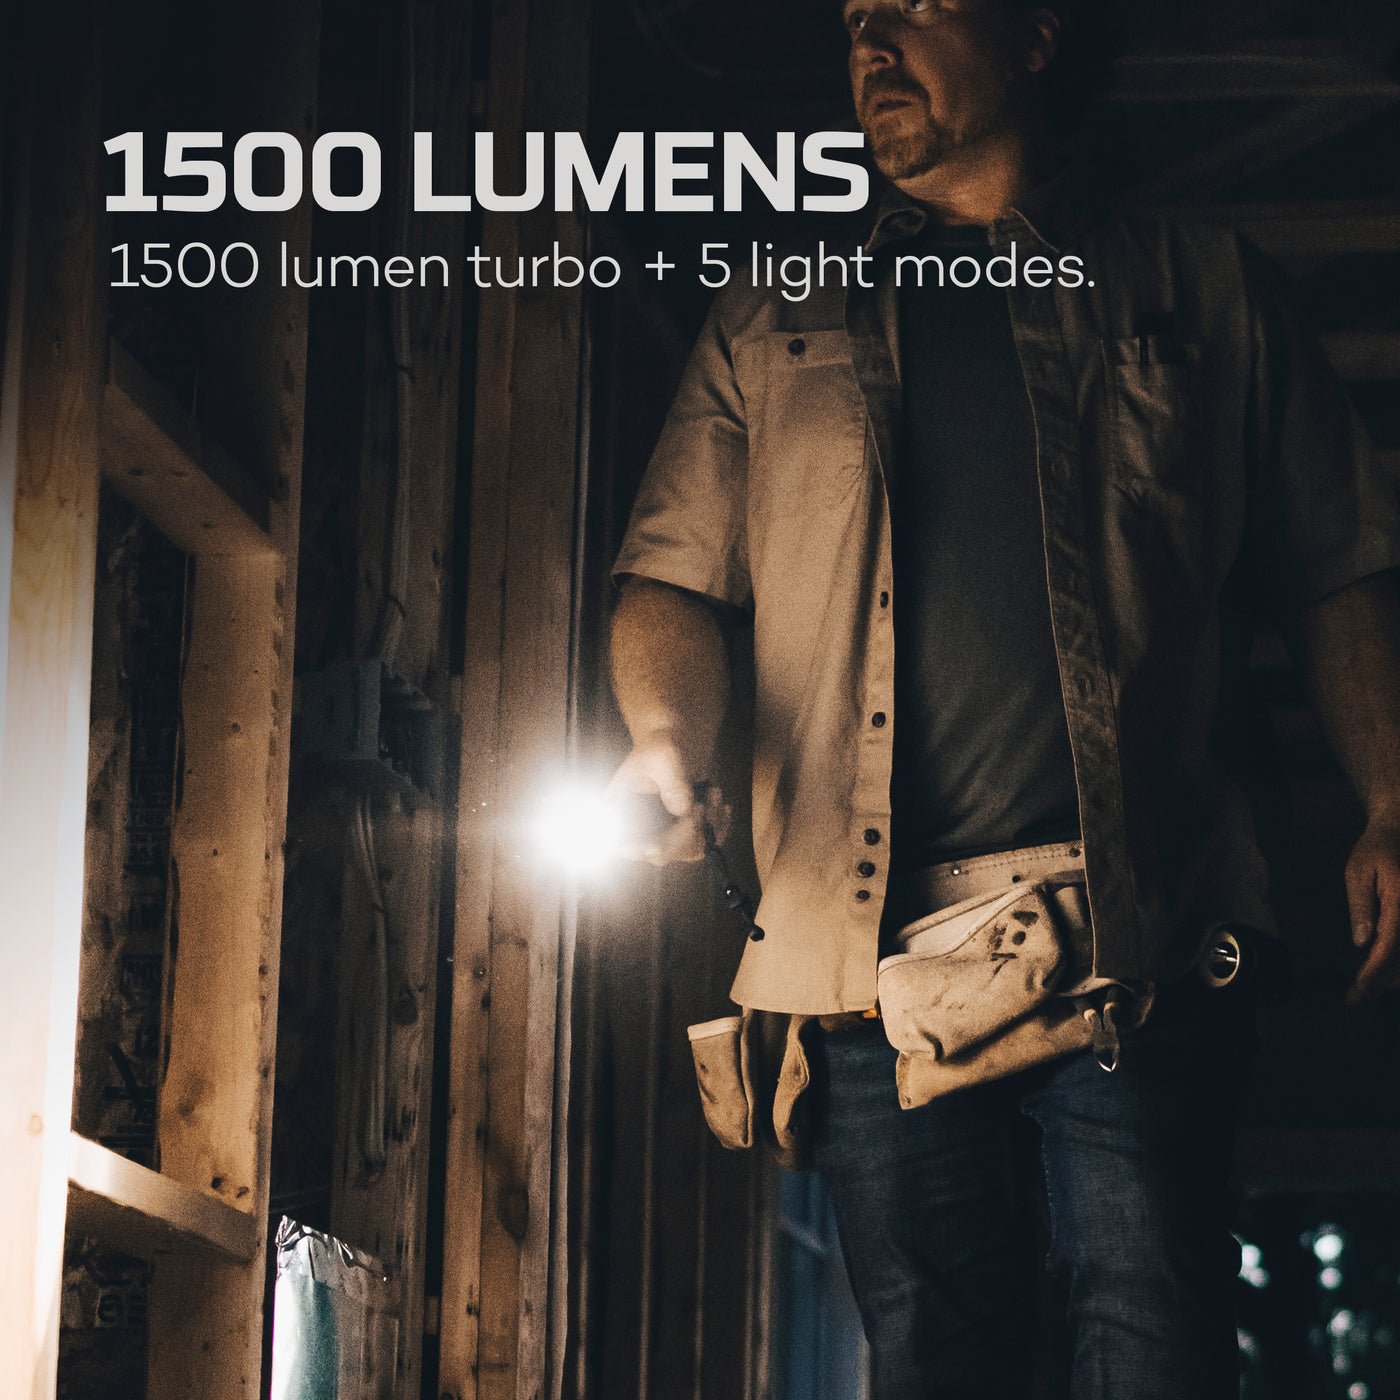 1500 lumen flashlight with 5 light modes